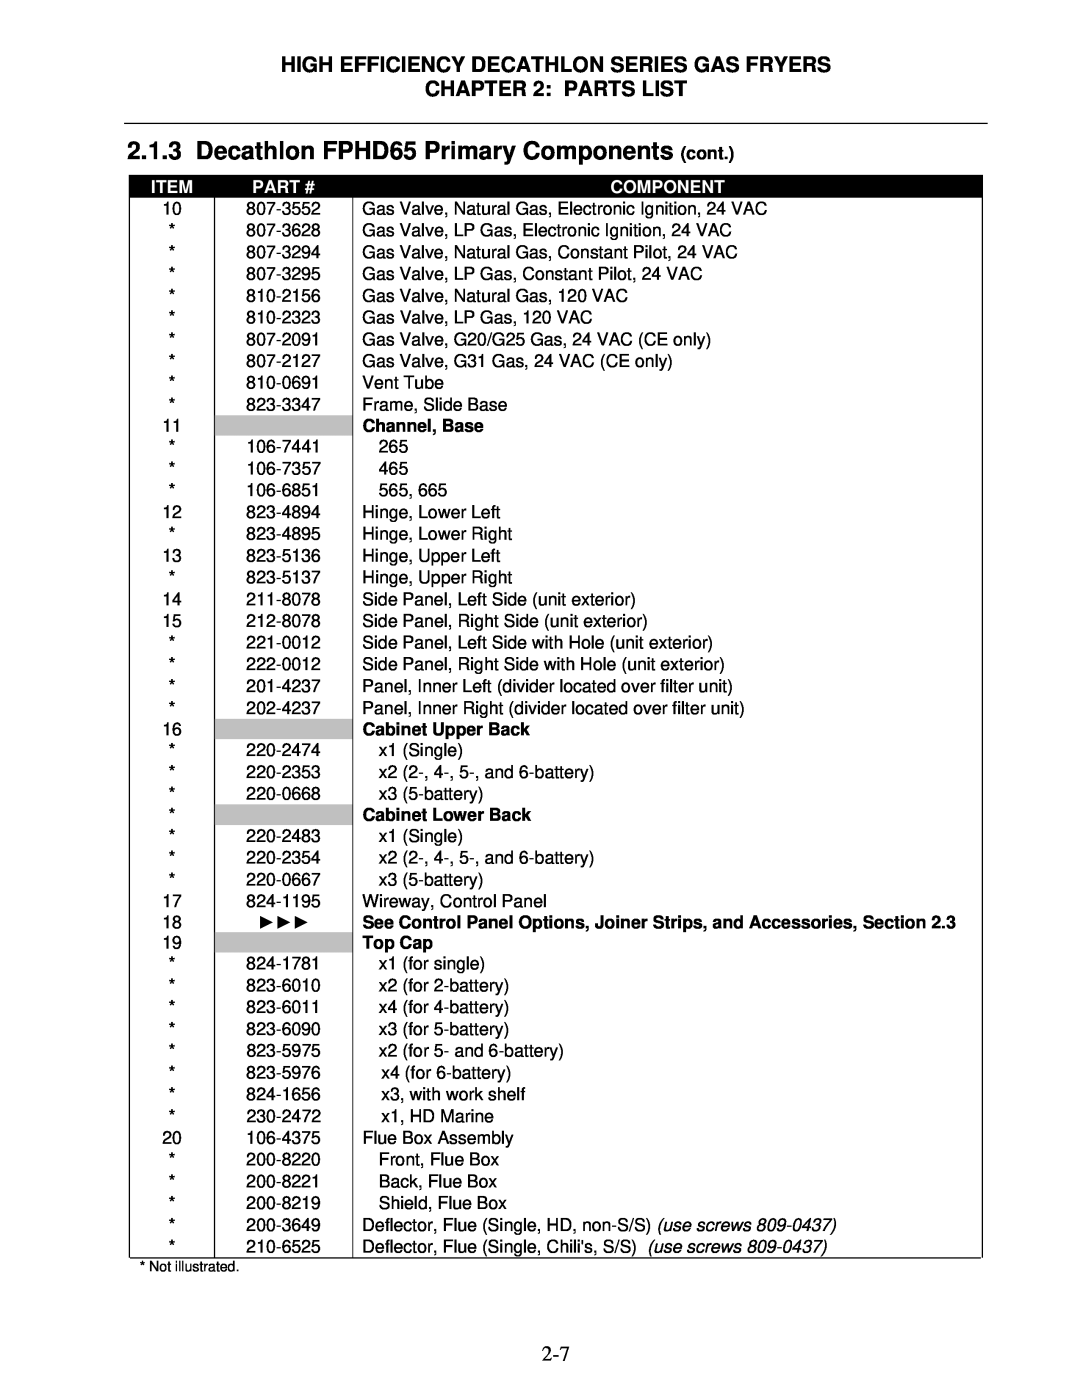 Frymaster manual Decathlon FPHD65 Primary Components cont, High Efficiency Decathlon Series Gas Fryers, Parts List, Item 